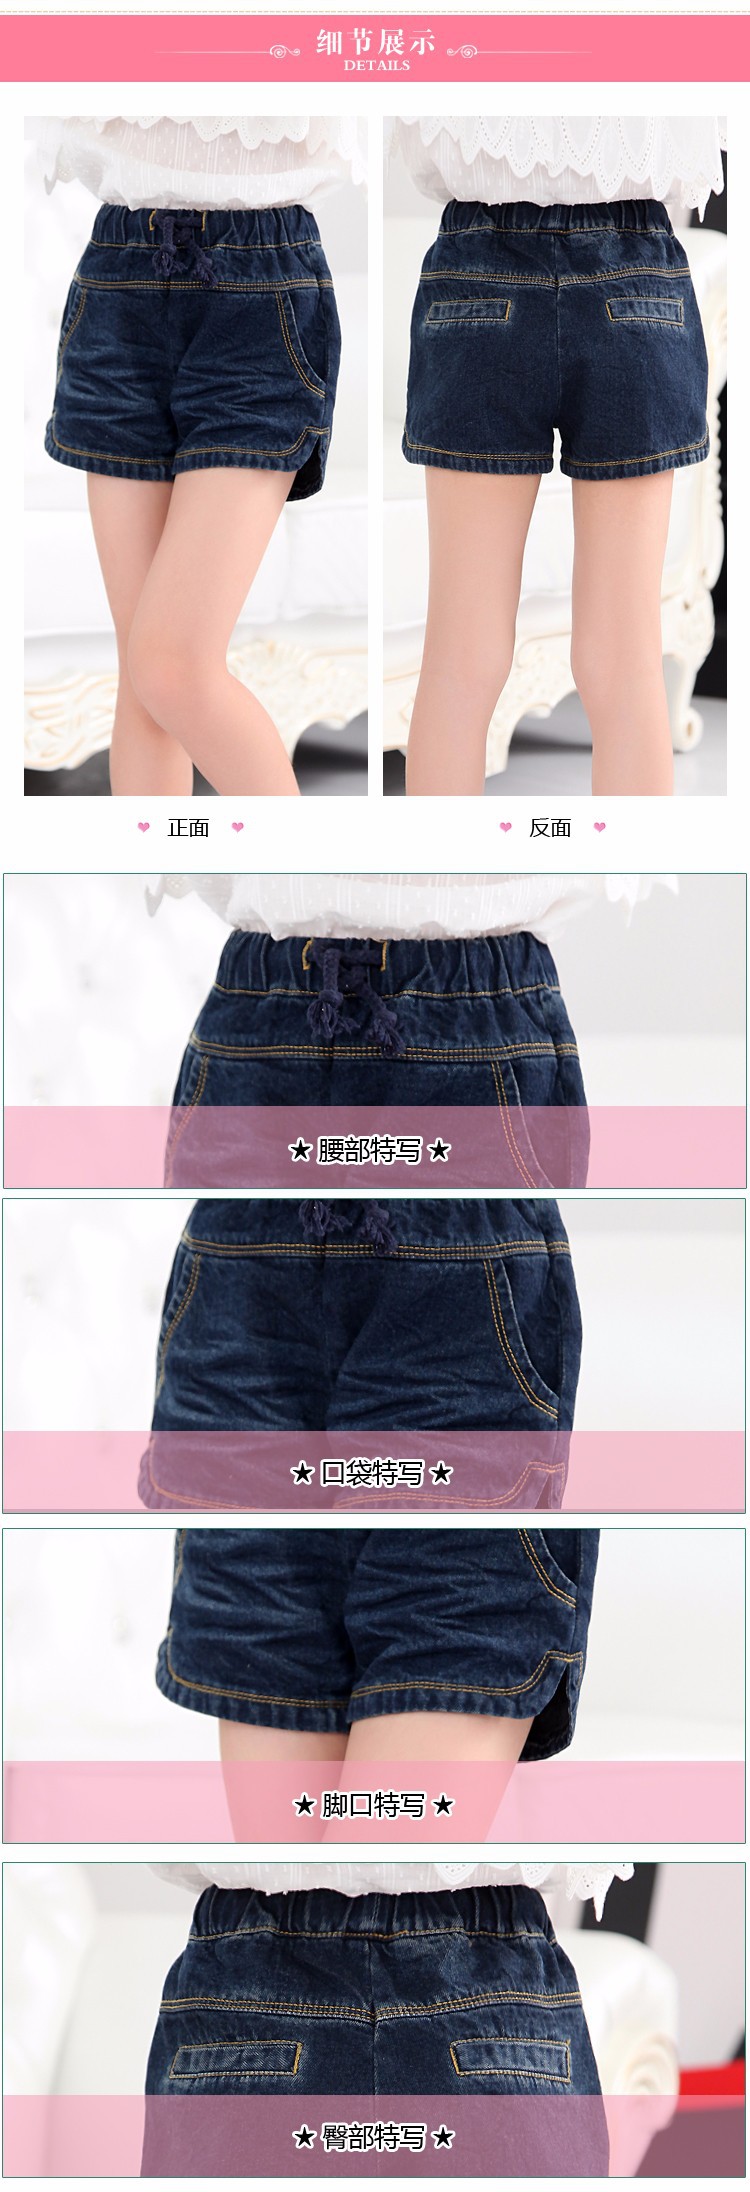 2015 news summers fashion girls shorts jeans with pockets pants children\'s brand denim kids shorts kikikids size 5-15 years (8)